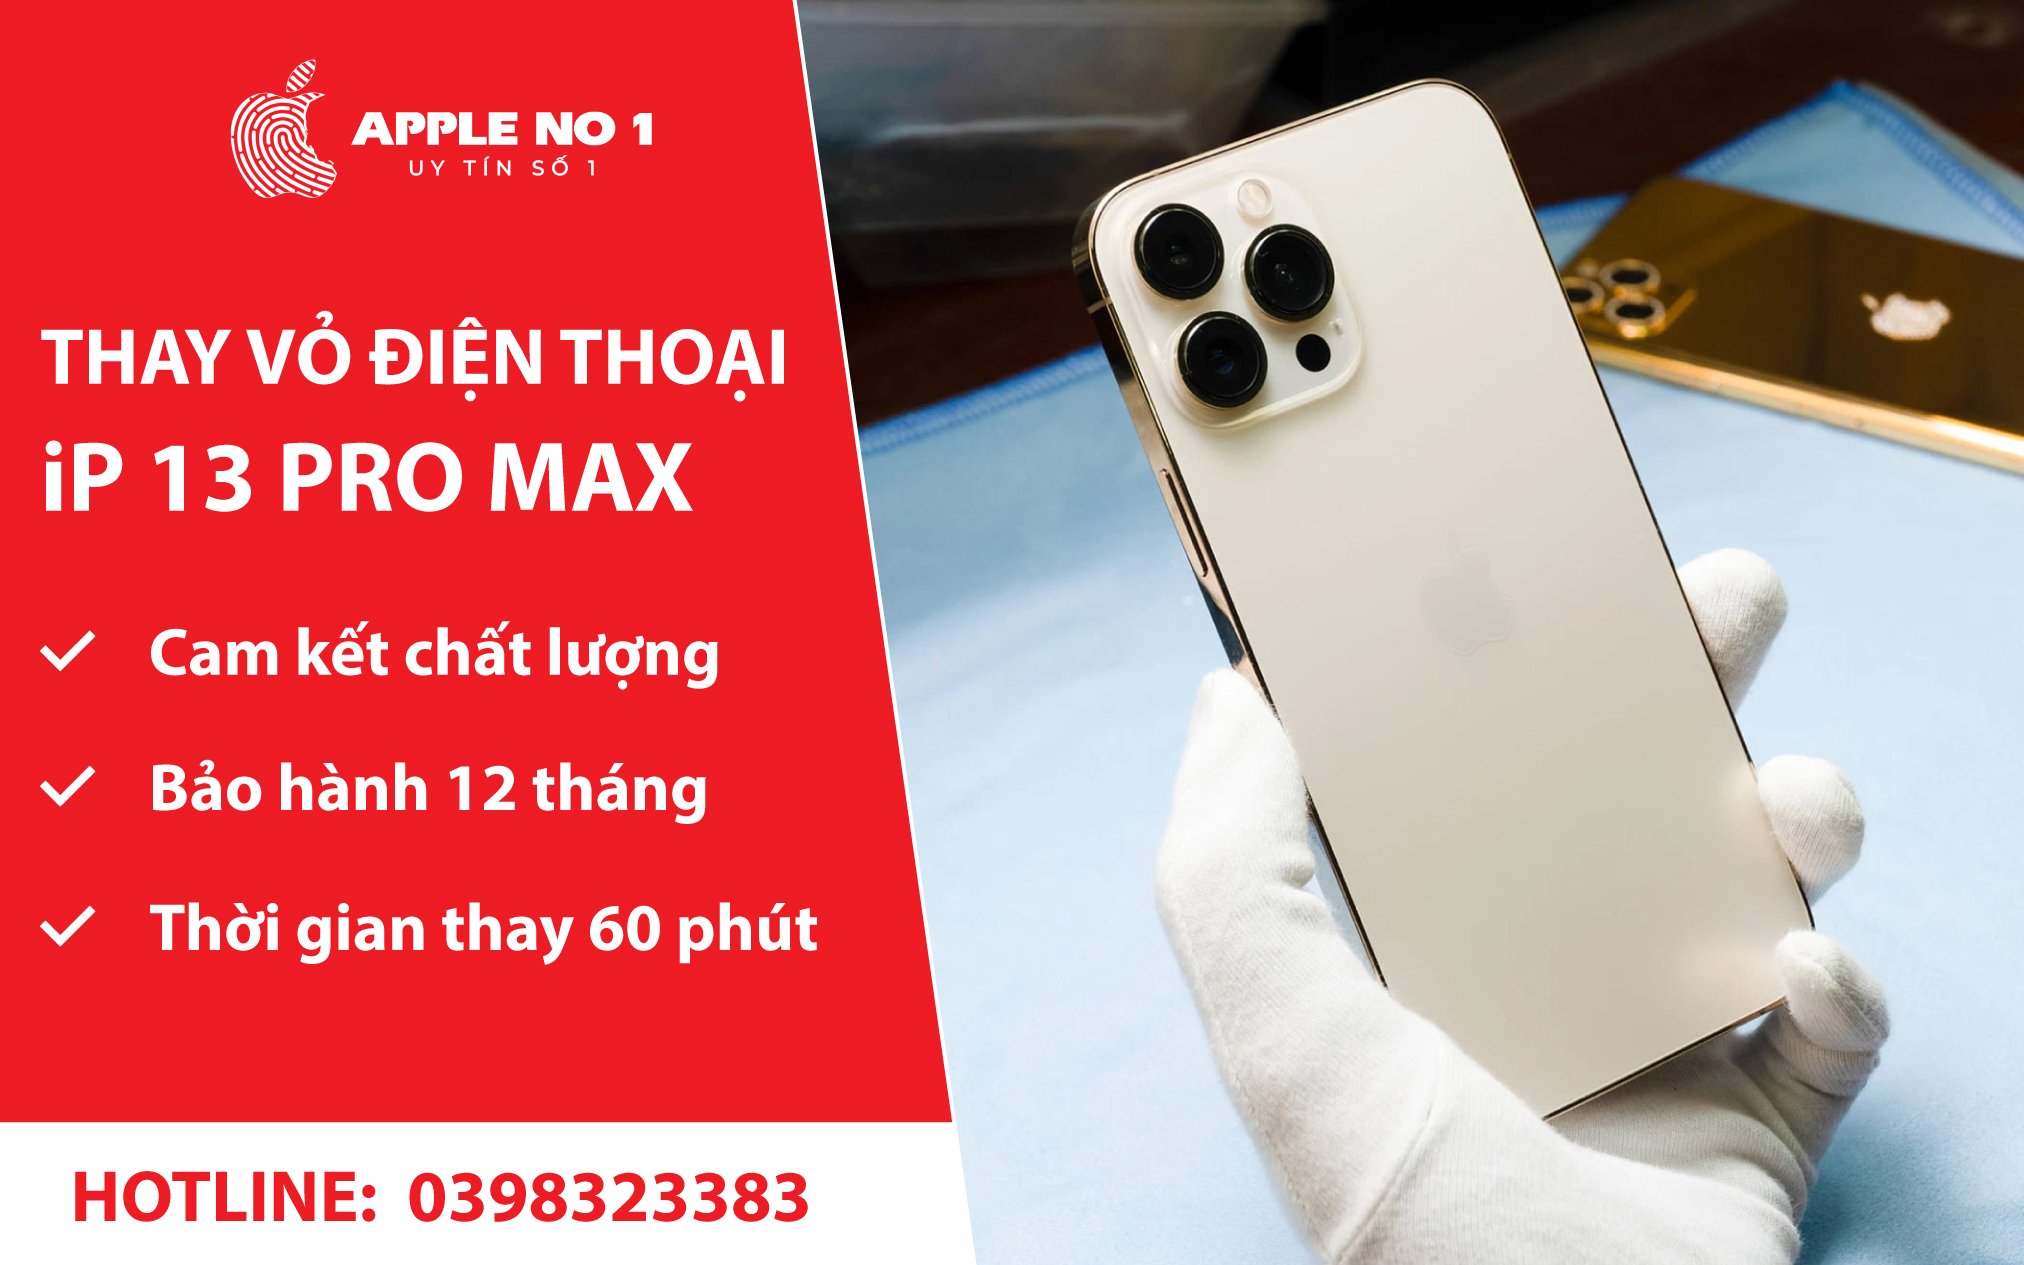 dich vu thay vo iphone 13 pro max chuyen nghiep, chat luong tai appleno1.vn